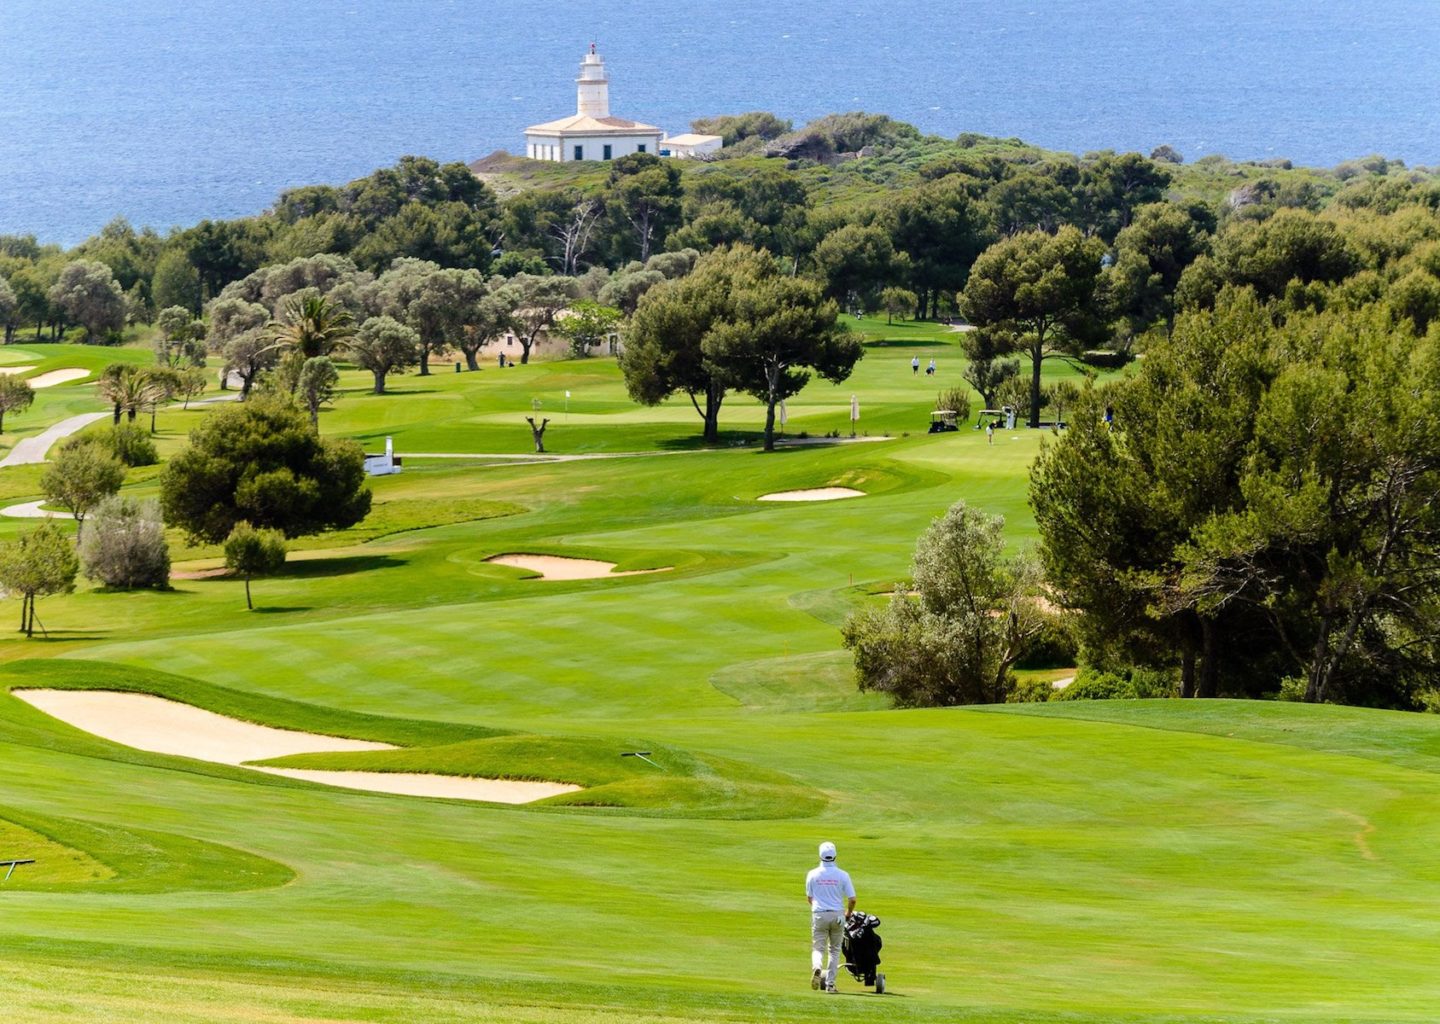 Club de Golf Alcanada, Golf in Majorca - Golf in Balearic Islands